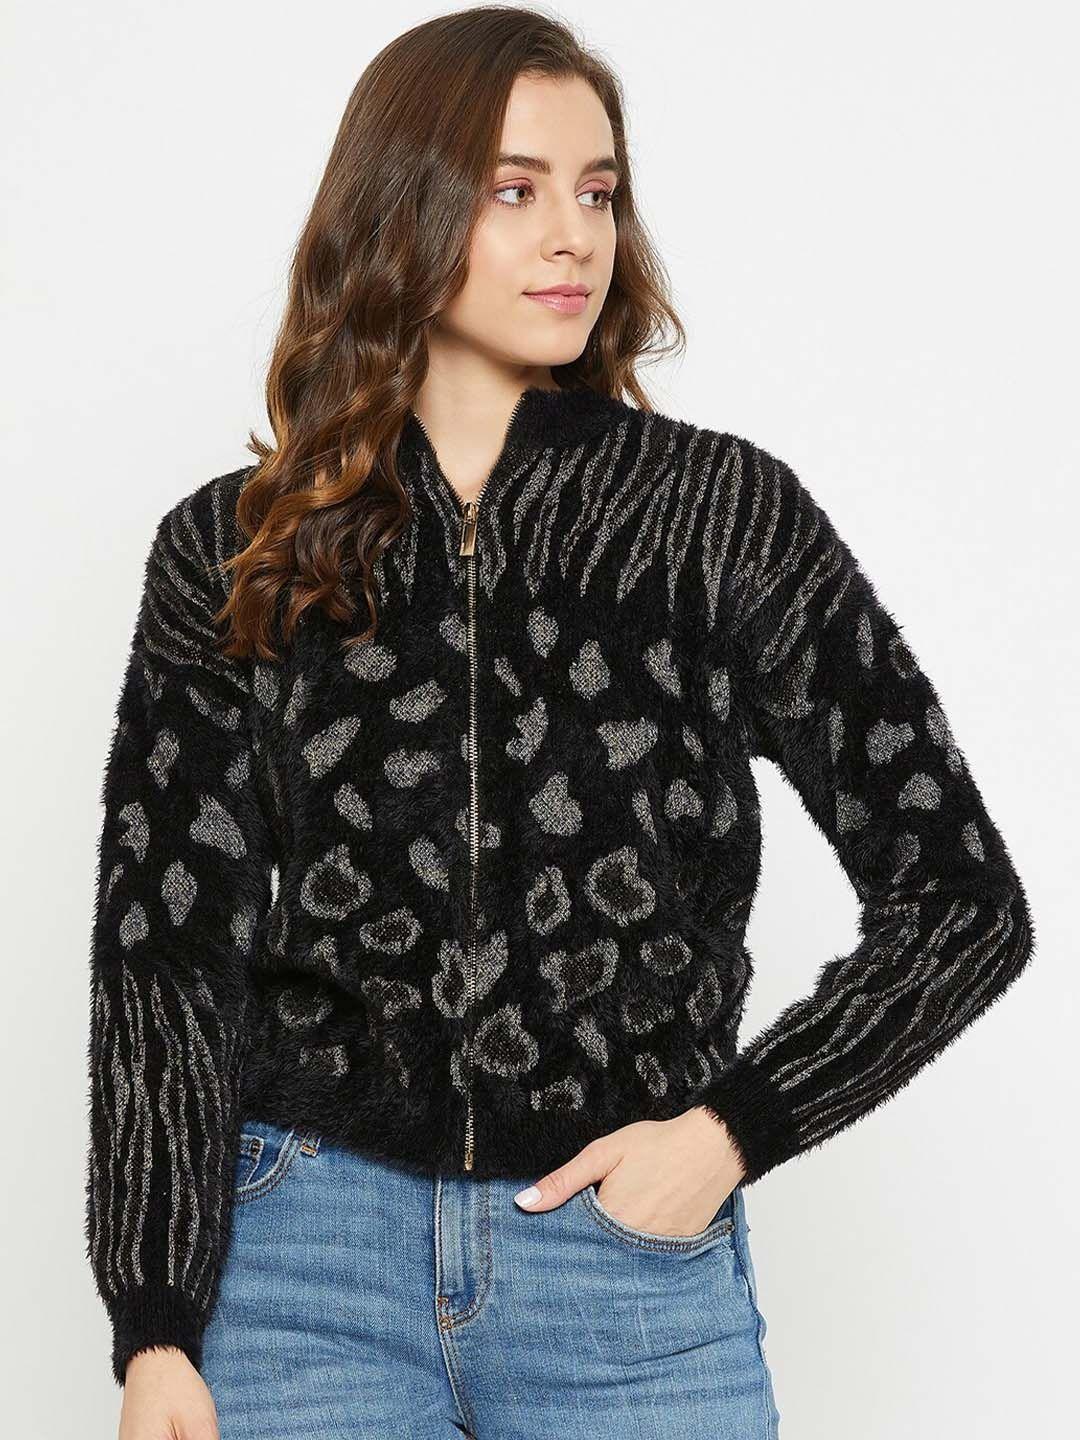 madame printed acrylic cardigan sweater